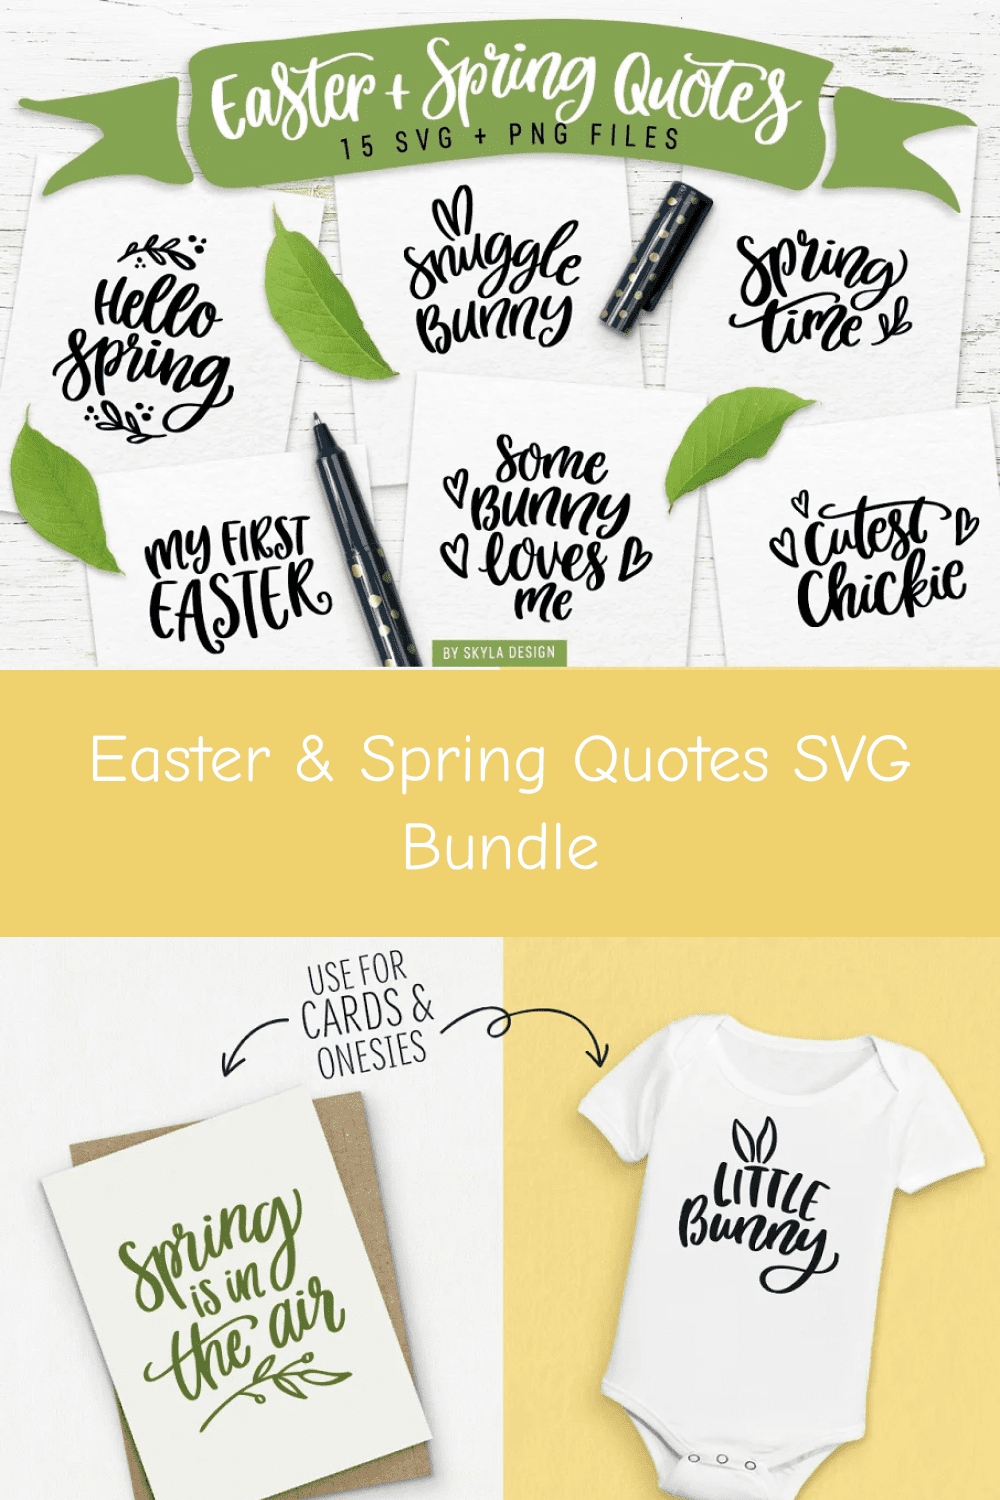 Easter & Spring Quotes SVG Bundle.